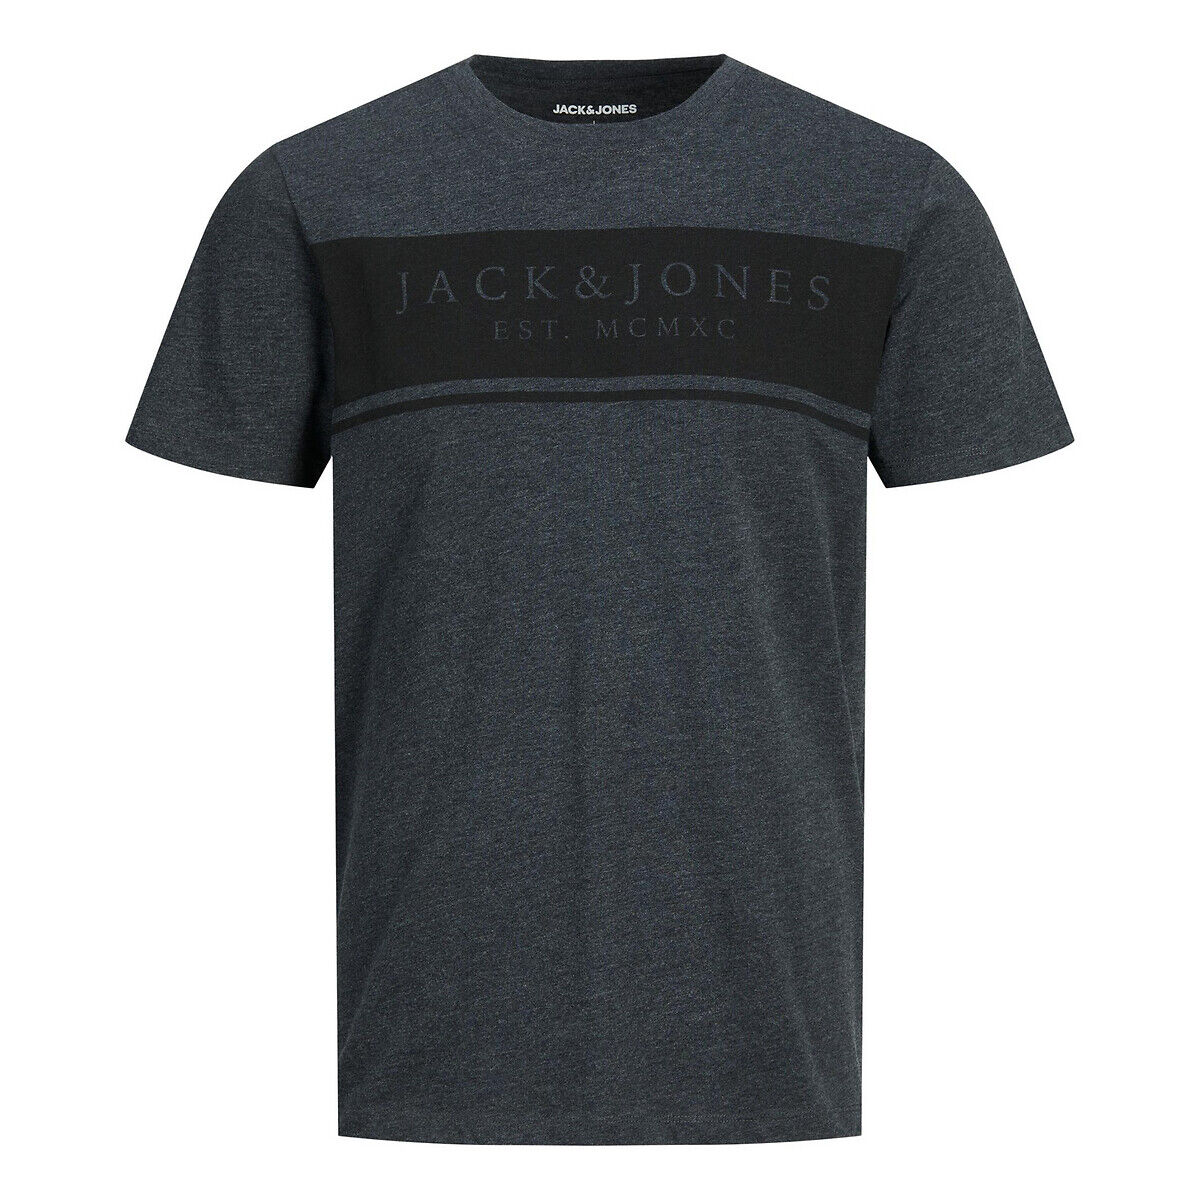 Jack & Jones T-shirt de gola redonda, River   Cinzento